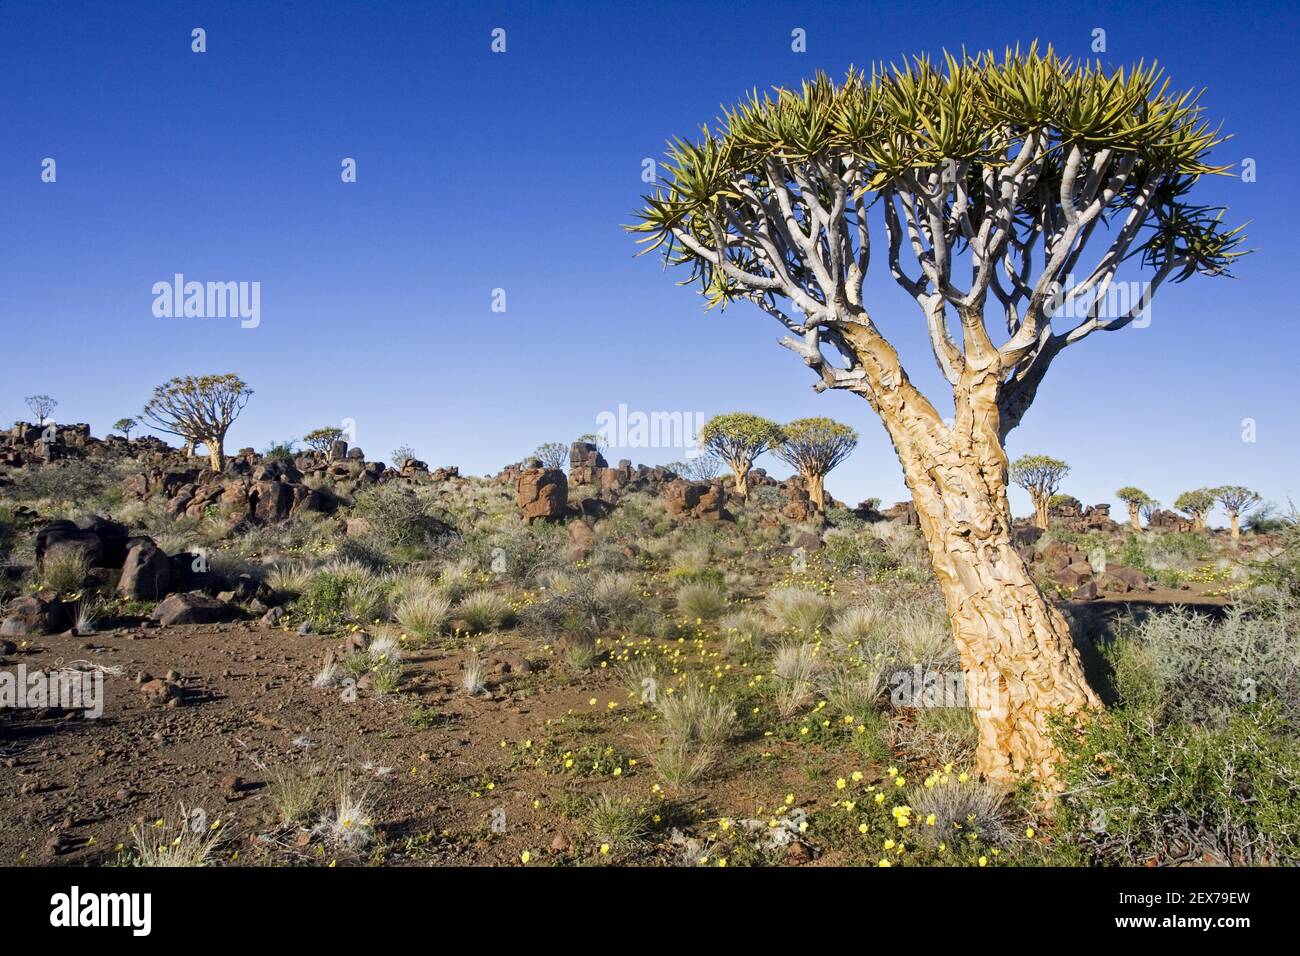 Koecherbaeume (Aloe dichotoma), Quiver trees, Koecherbaumwald Garaspark, Keetmanshoop, Namibia, Africa Stock Photo